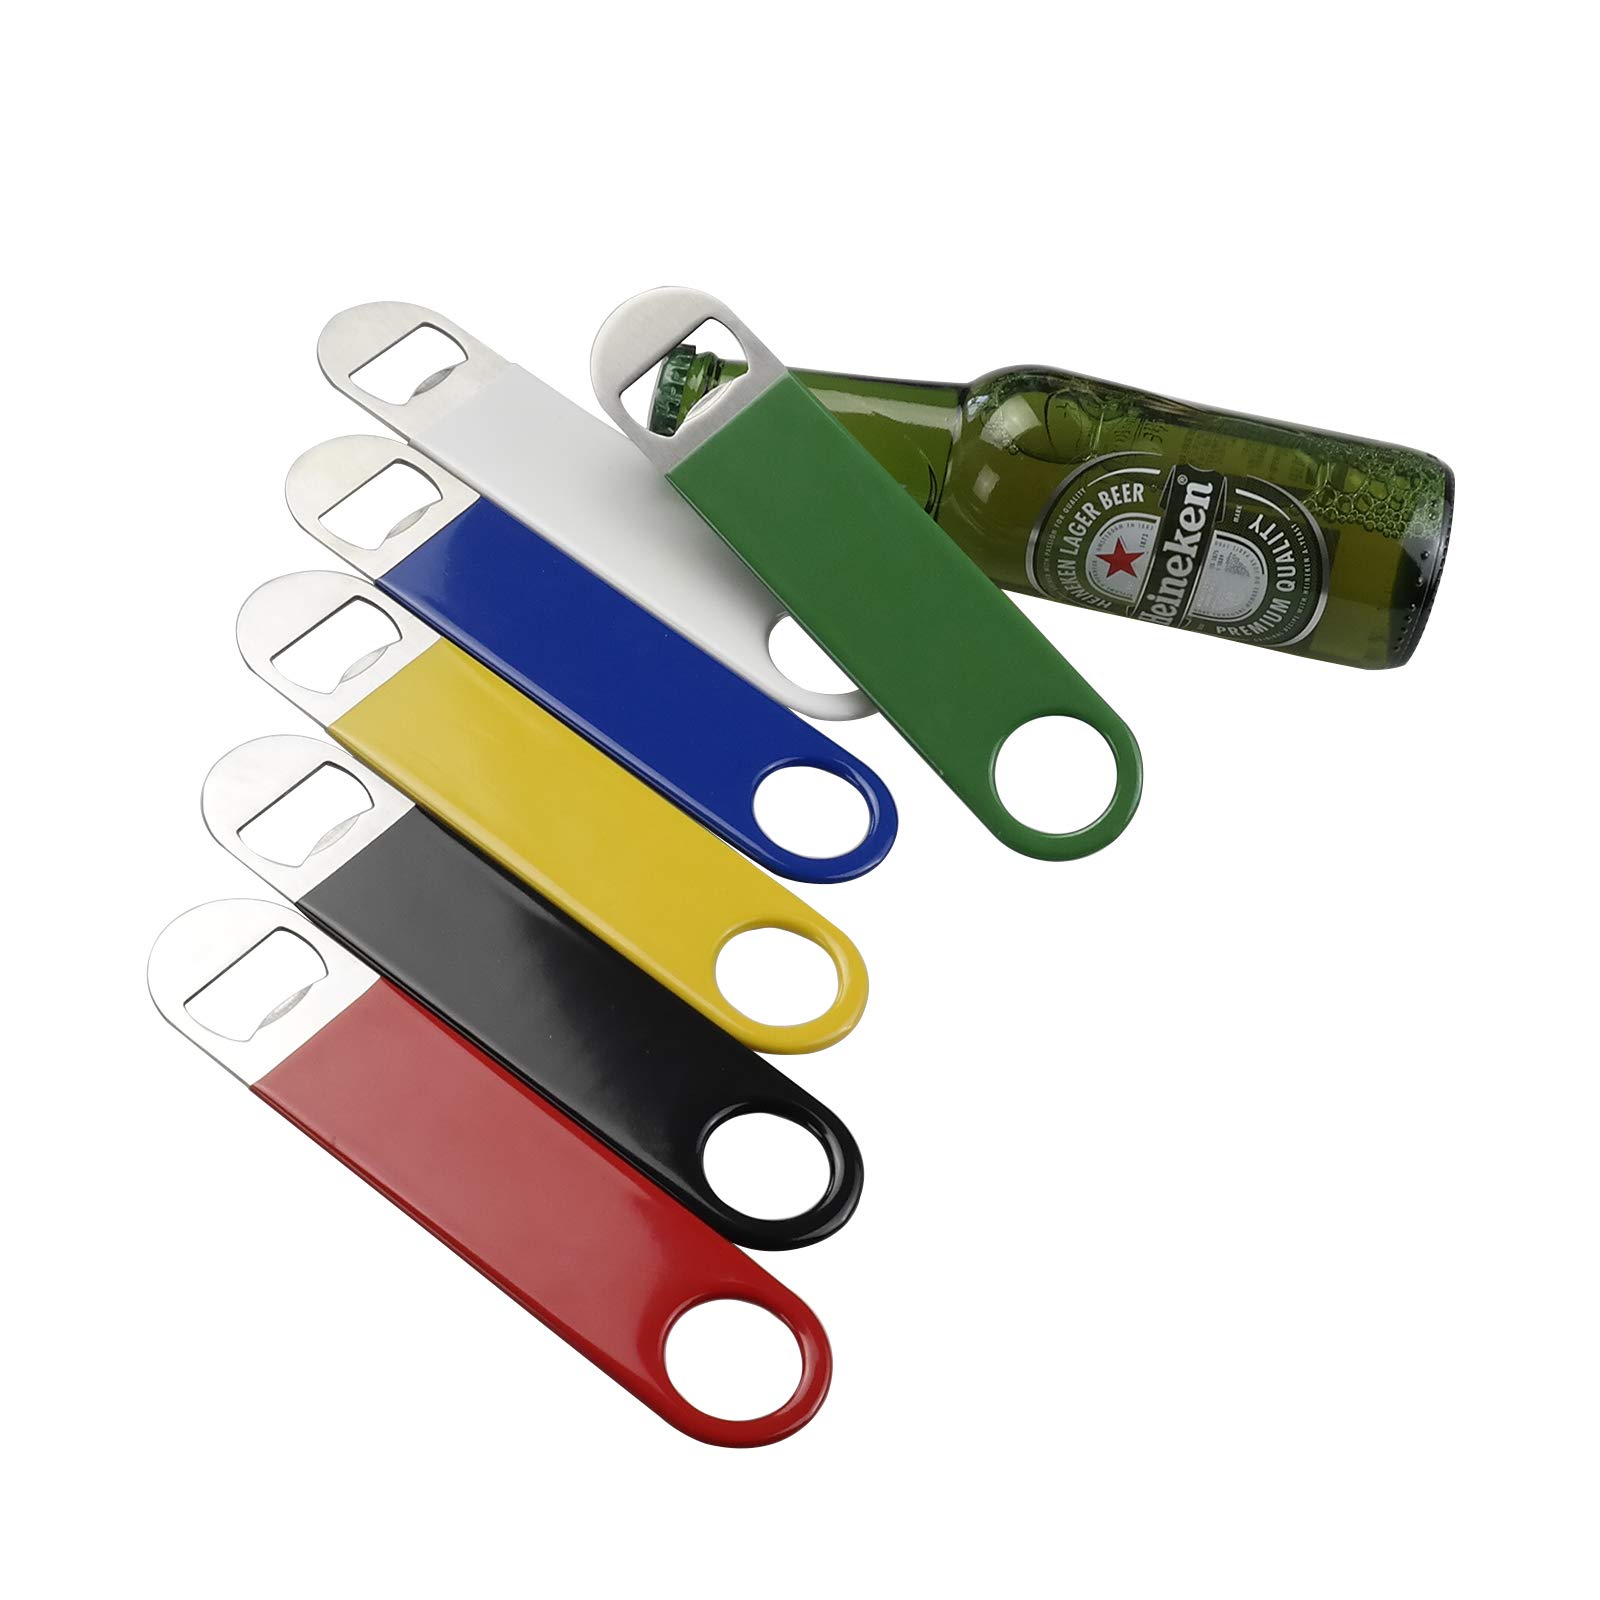 Wekioger 6 Packs Stainless Steel Flat Bottle Openers, Bartender Beer Bottle Opener